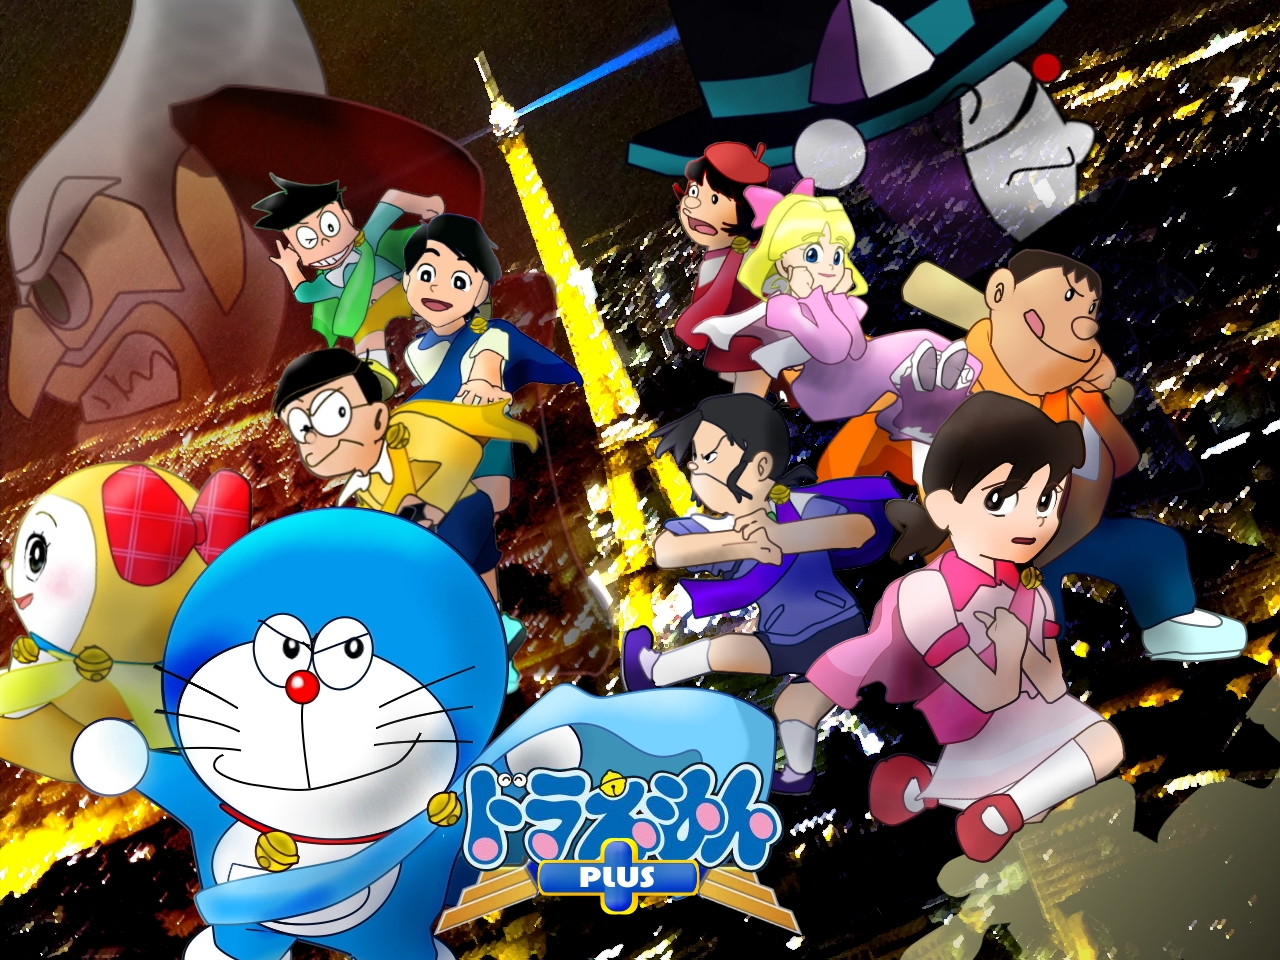 Anime Doraemon Picture by (C)Fujiko-Pro, TV-Asahi, Shogakukan, Shin-ei, and ADK 2012